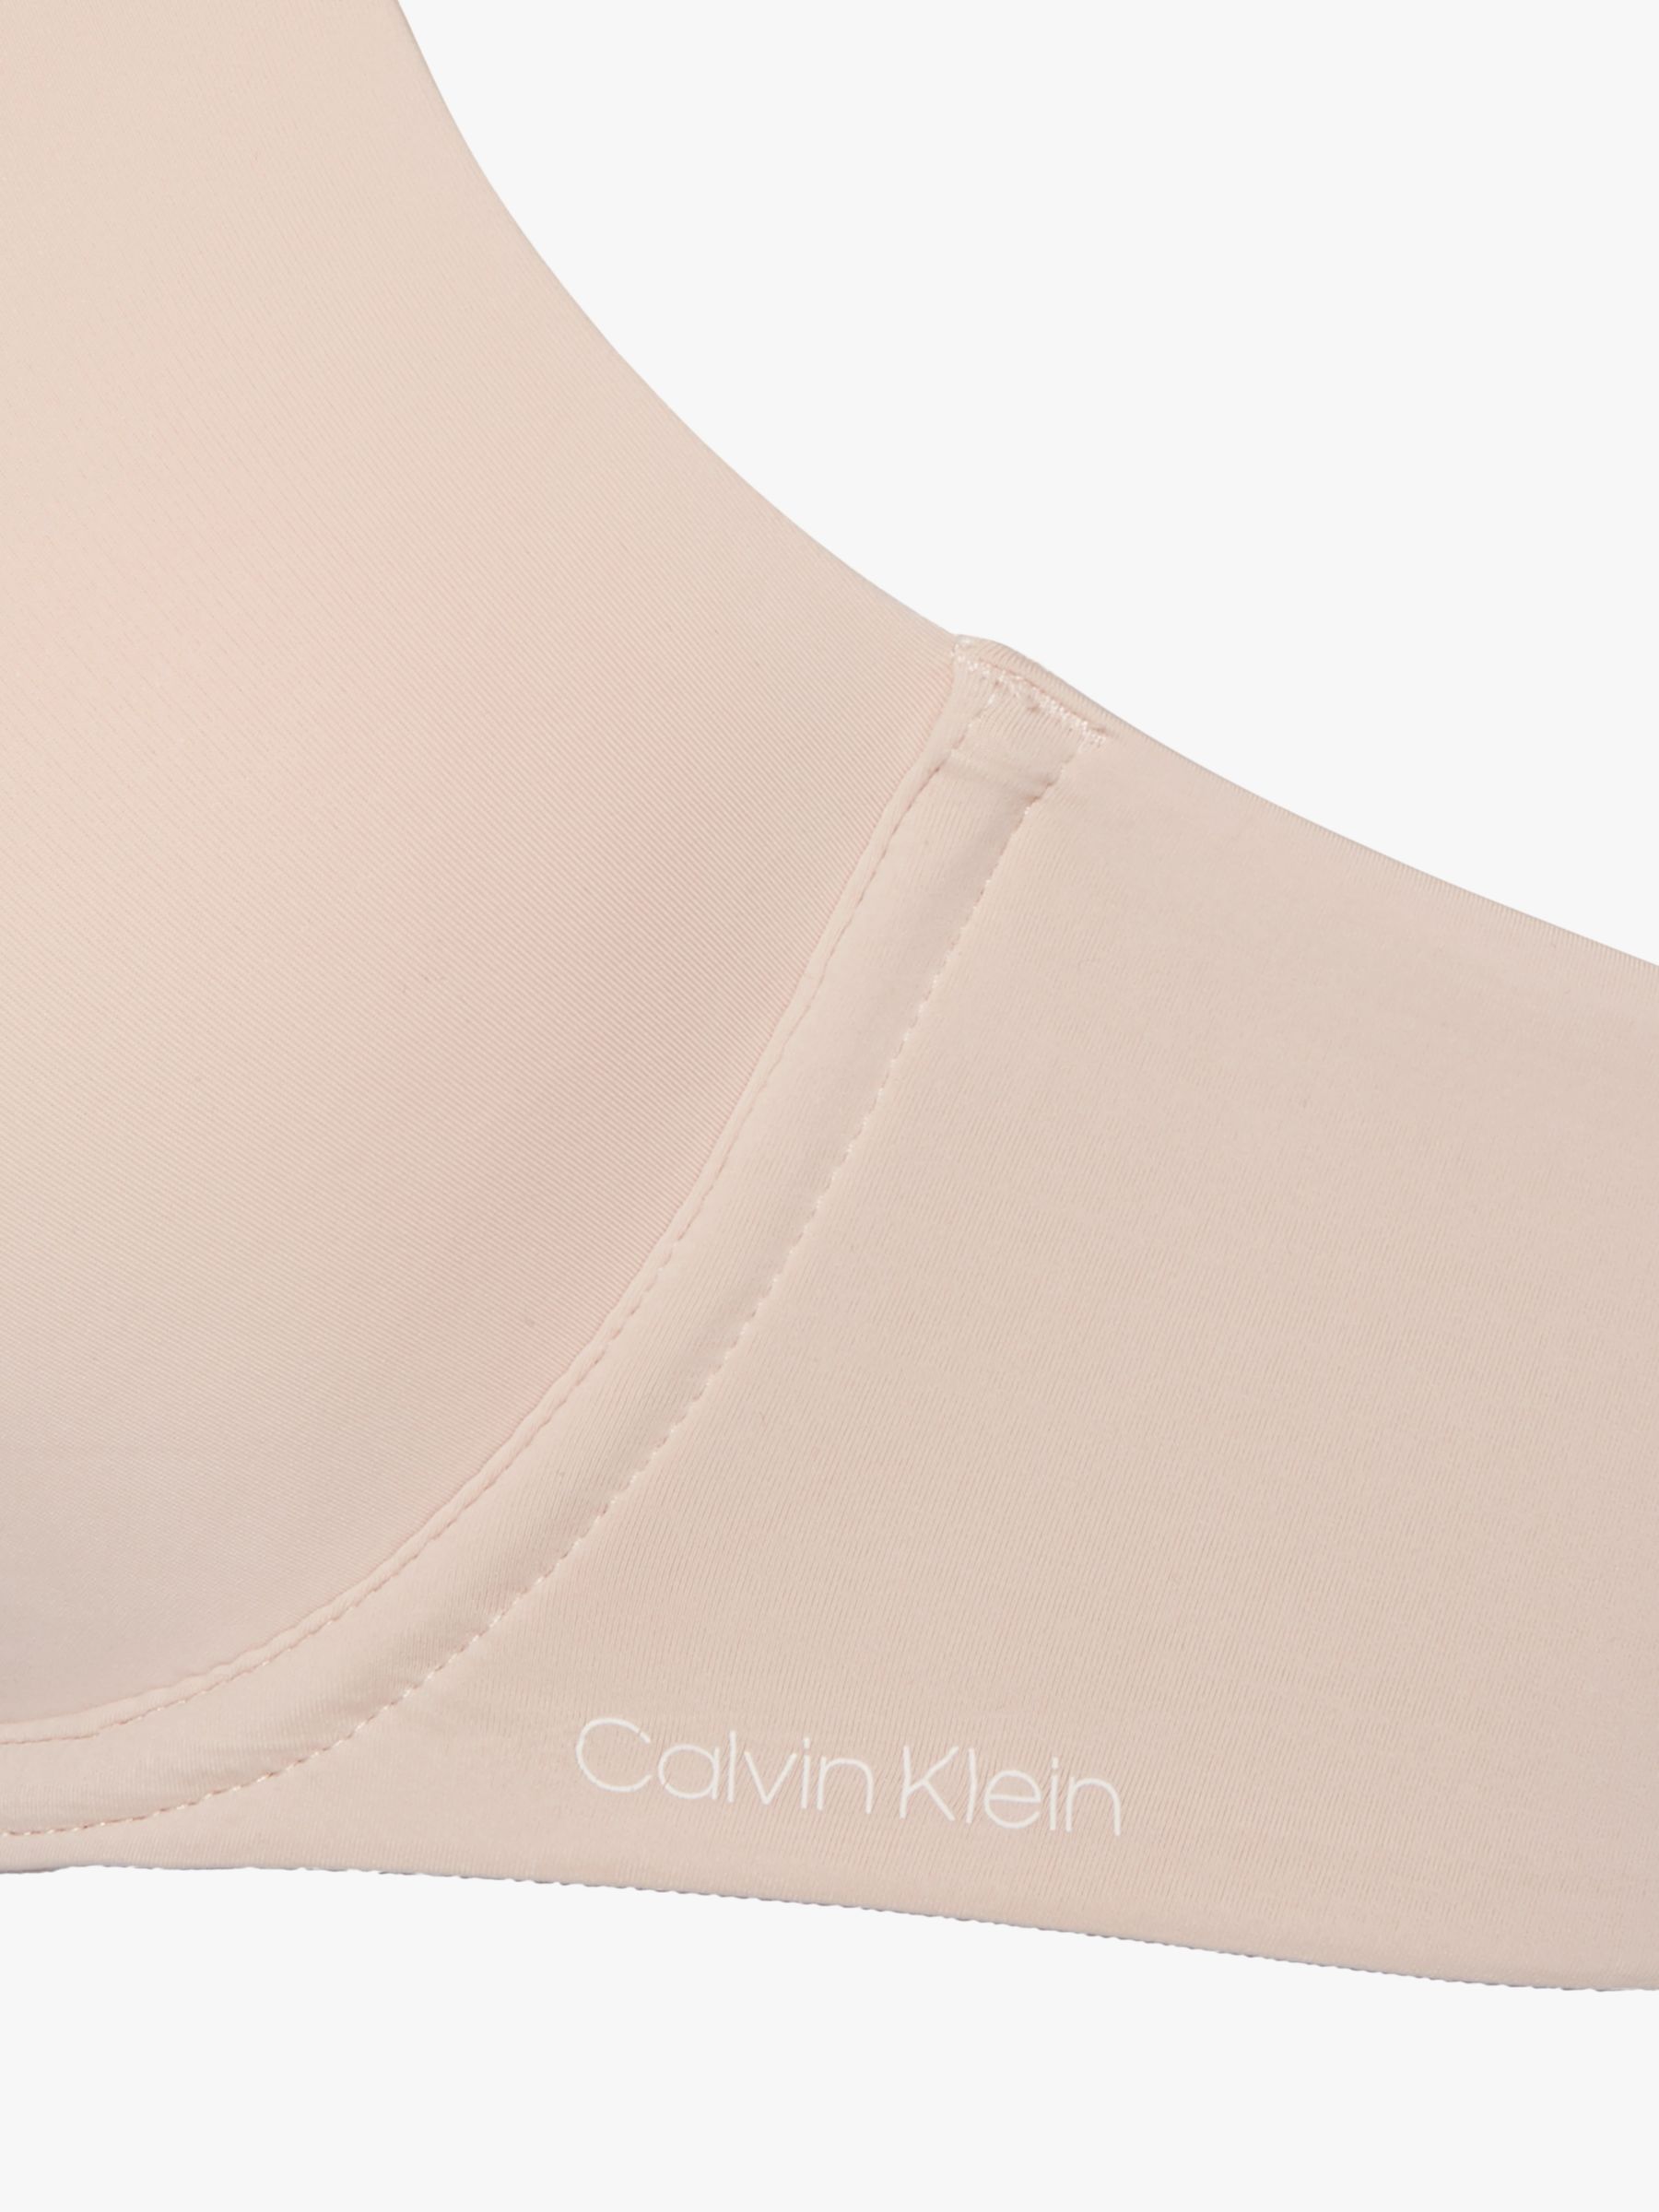 Calvin Klein Seductive Comfort Lift Demi Bra, Beechwood at John